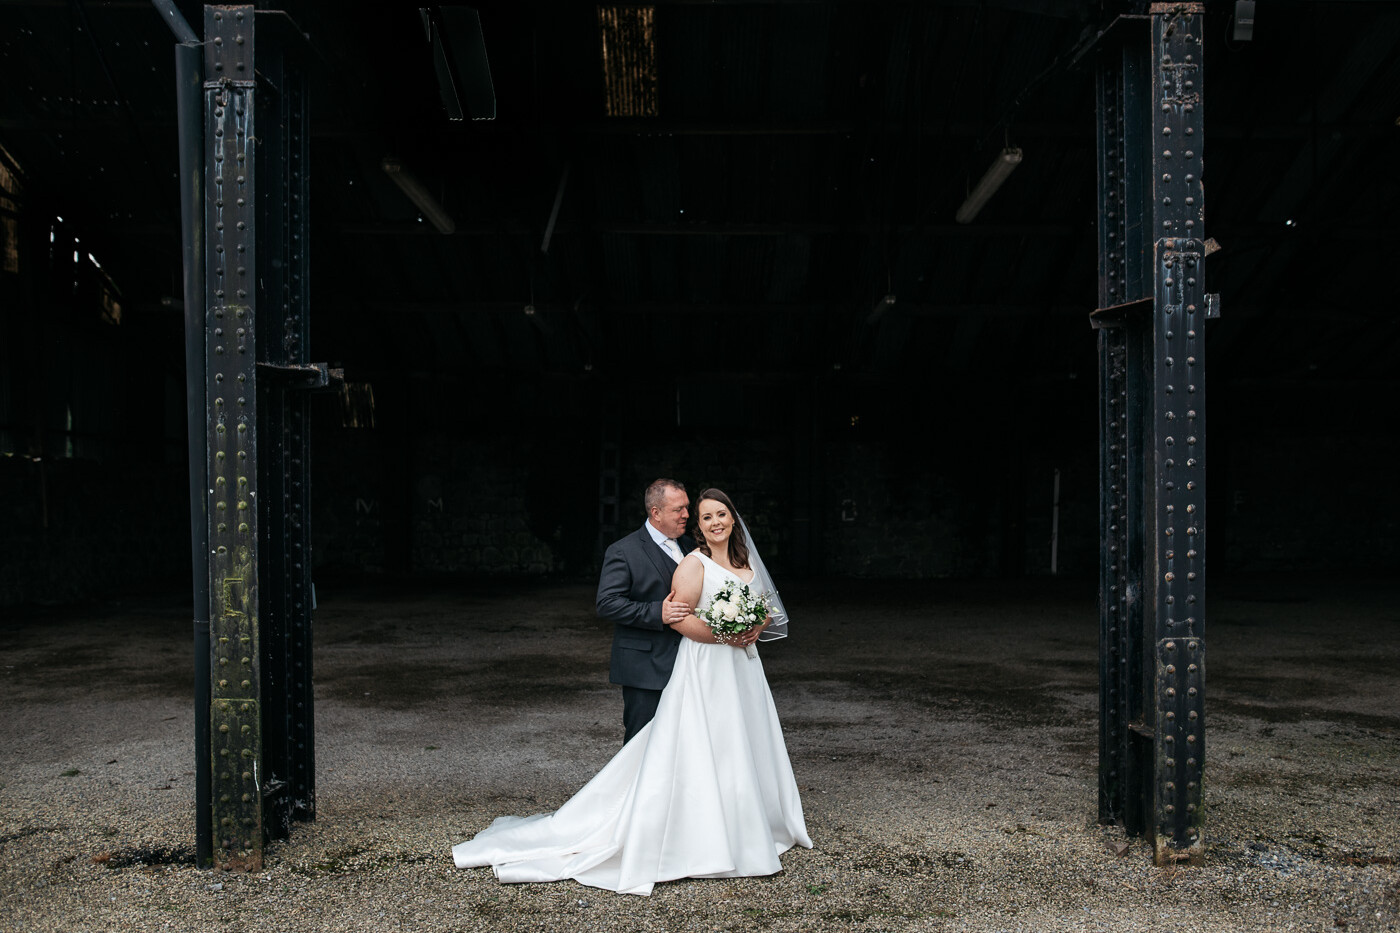 Wedding photographers in Dublin 13 12 2021 14